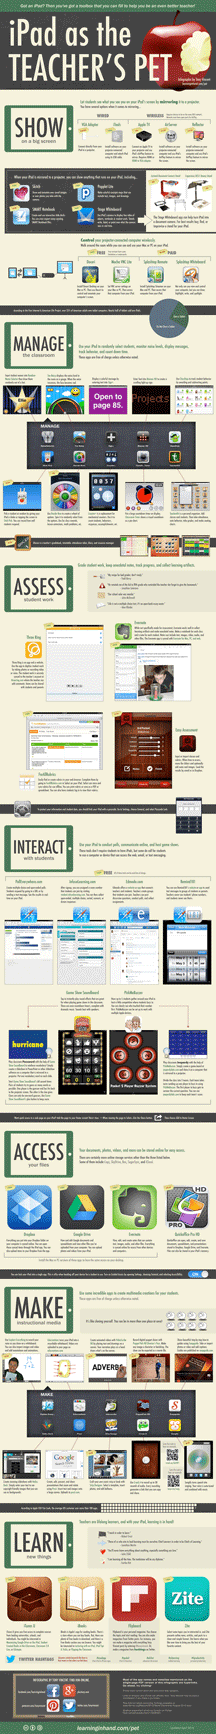 iPad as teachers pet infographic